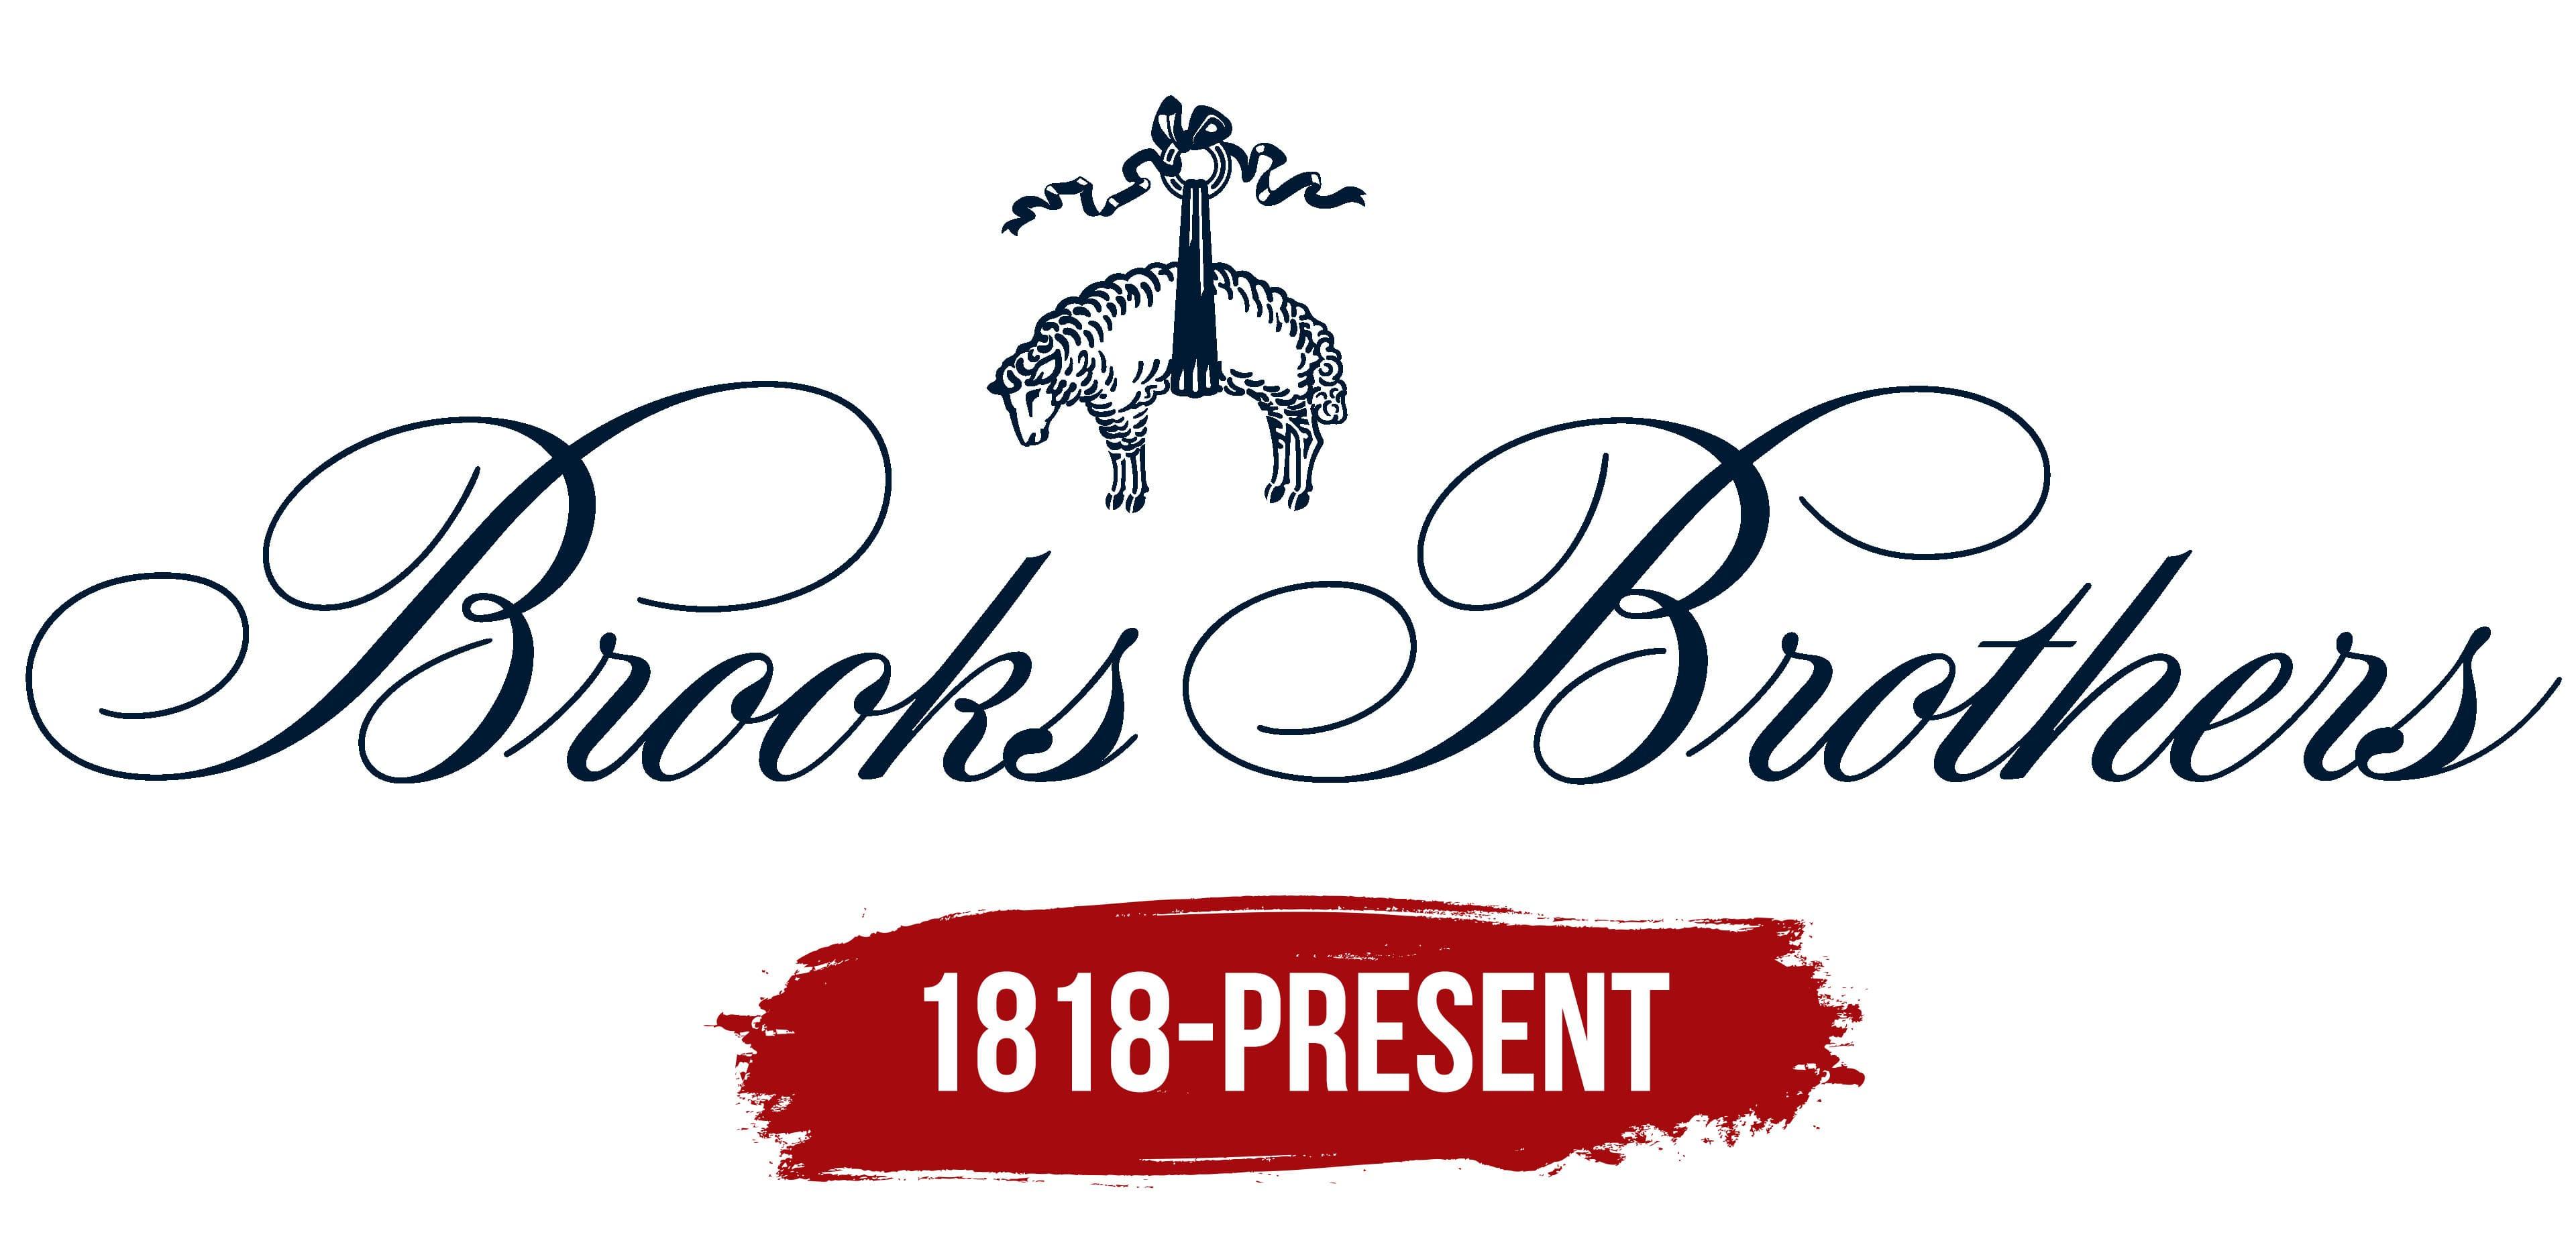 Brooks Brothers Emblem